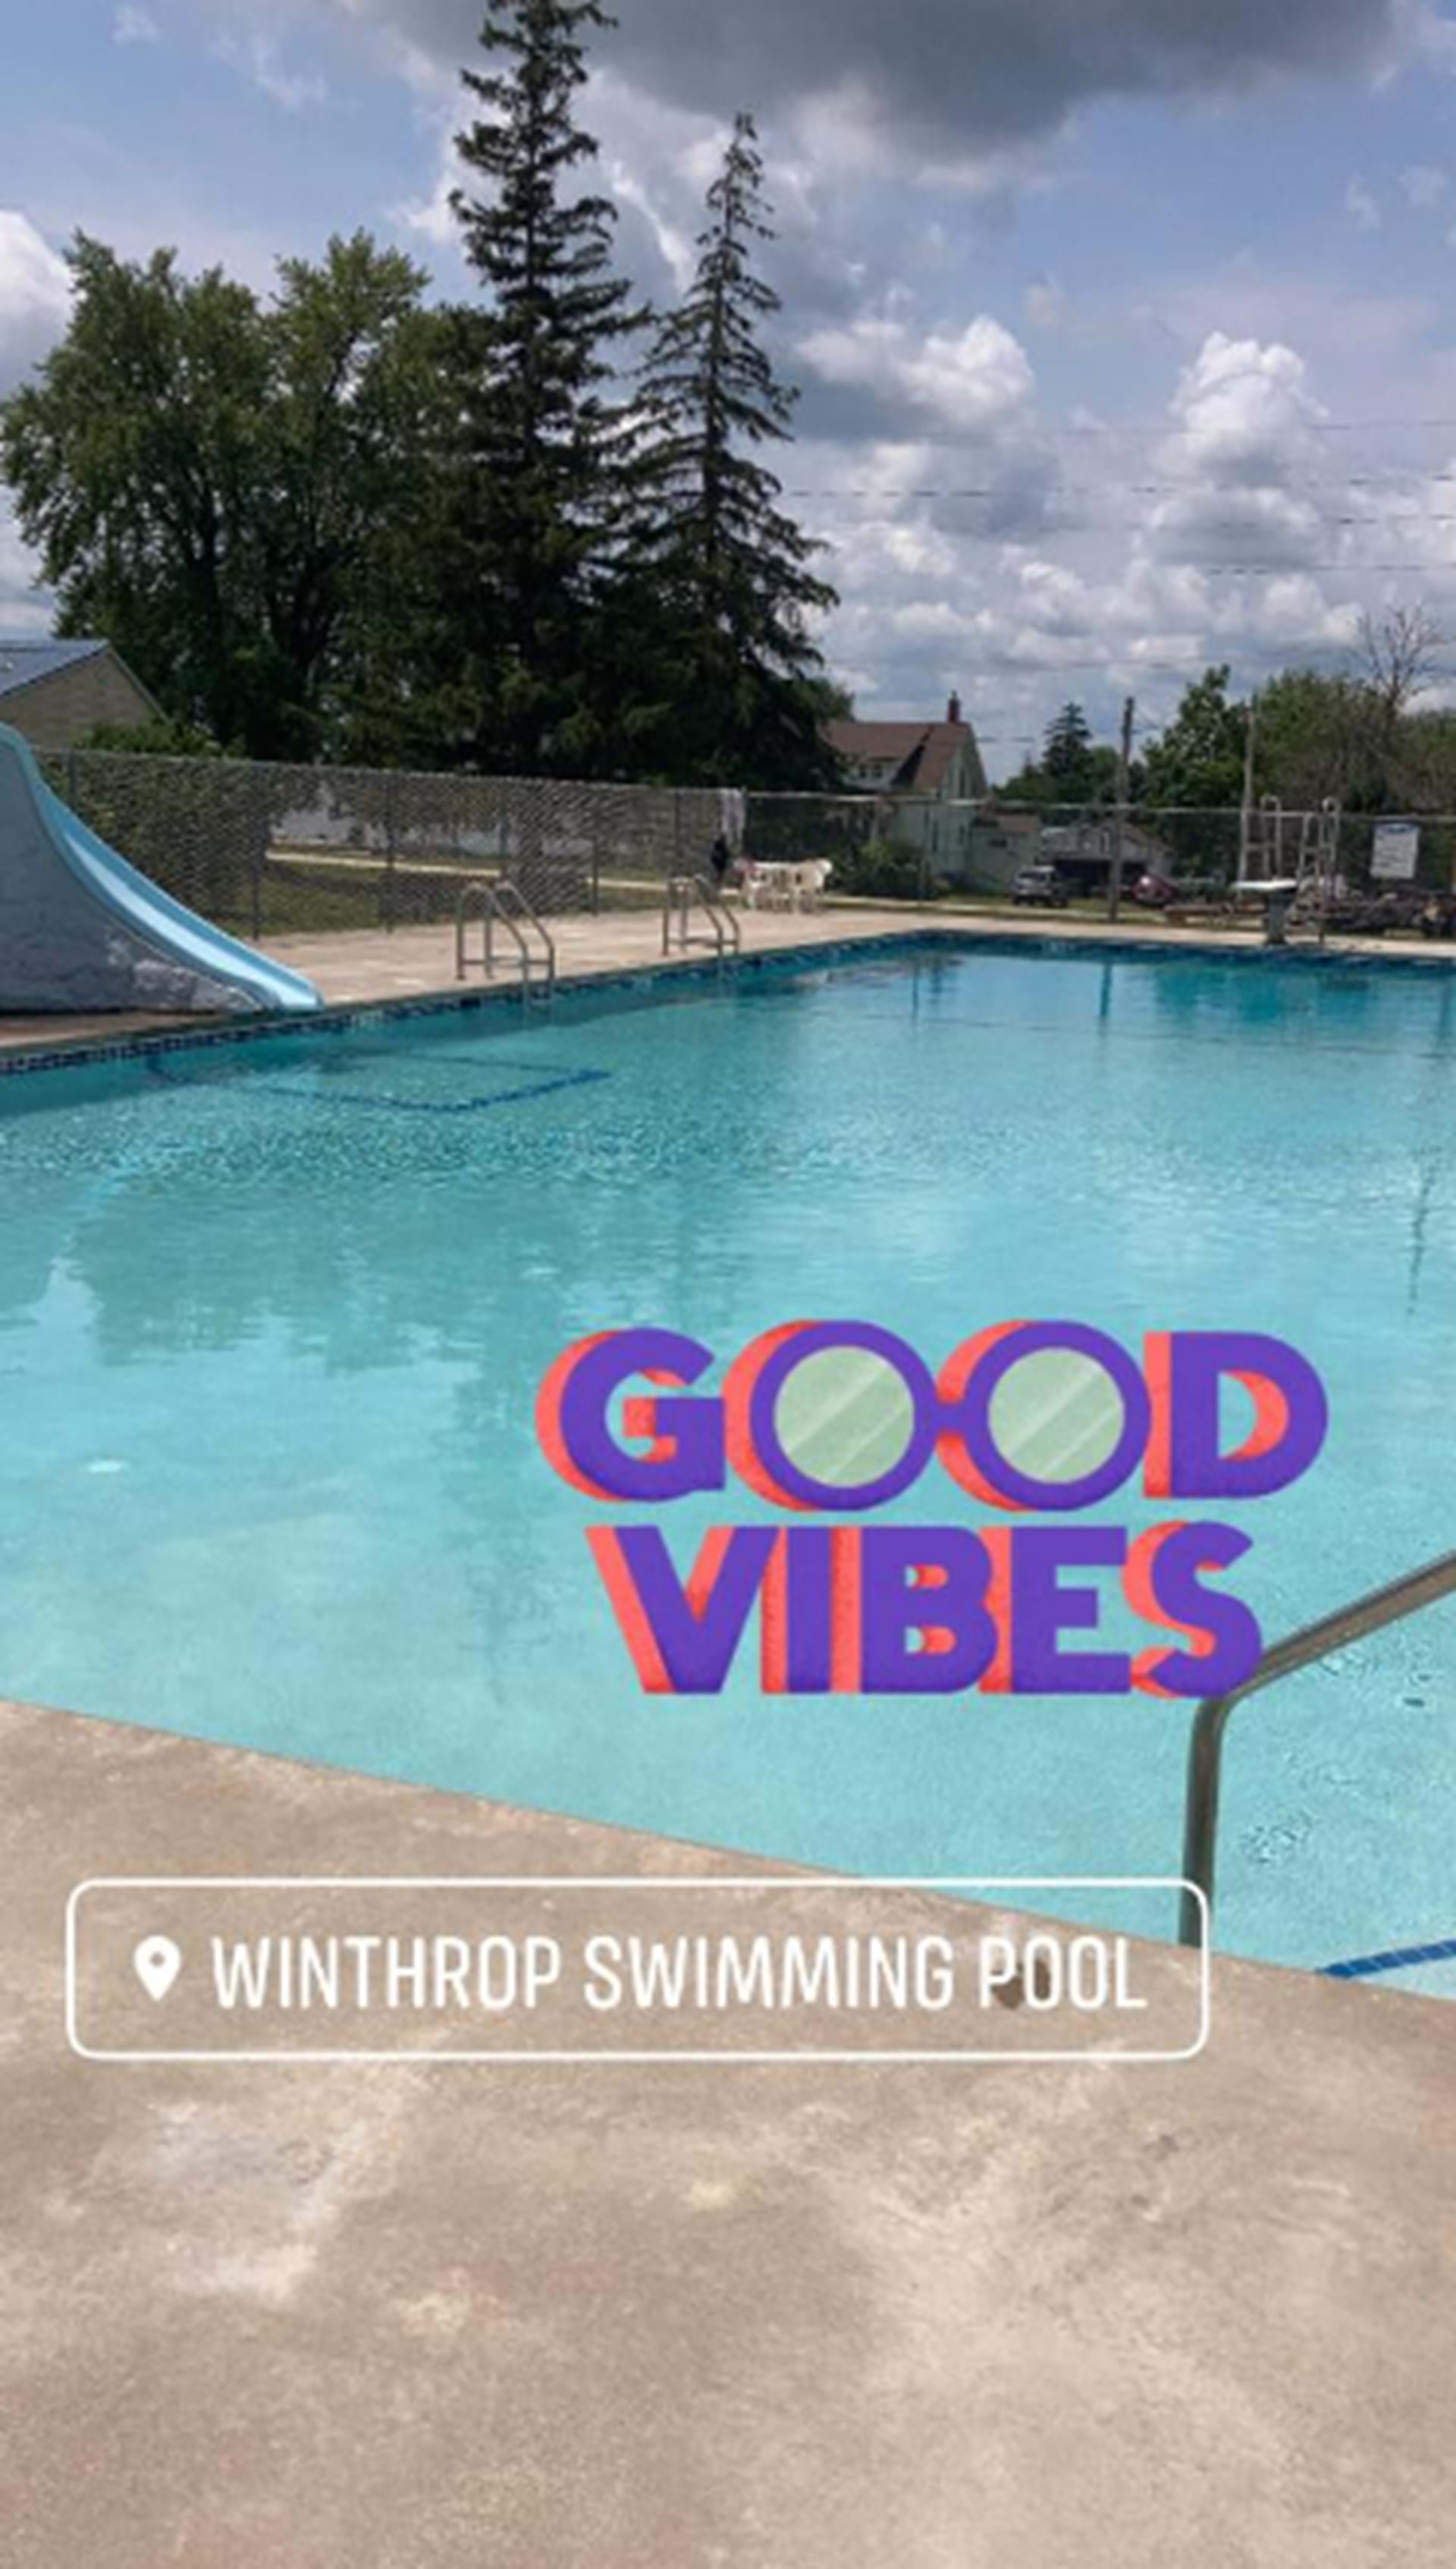 Winthrop Swimming Pool